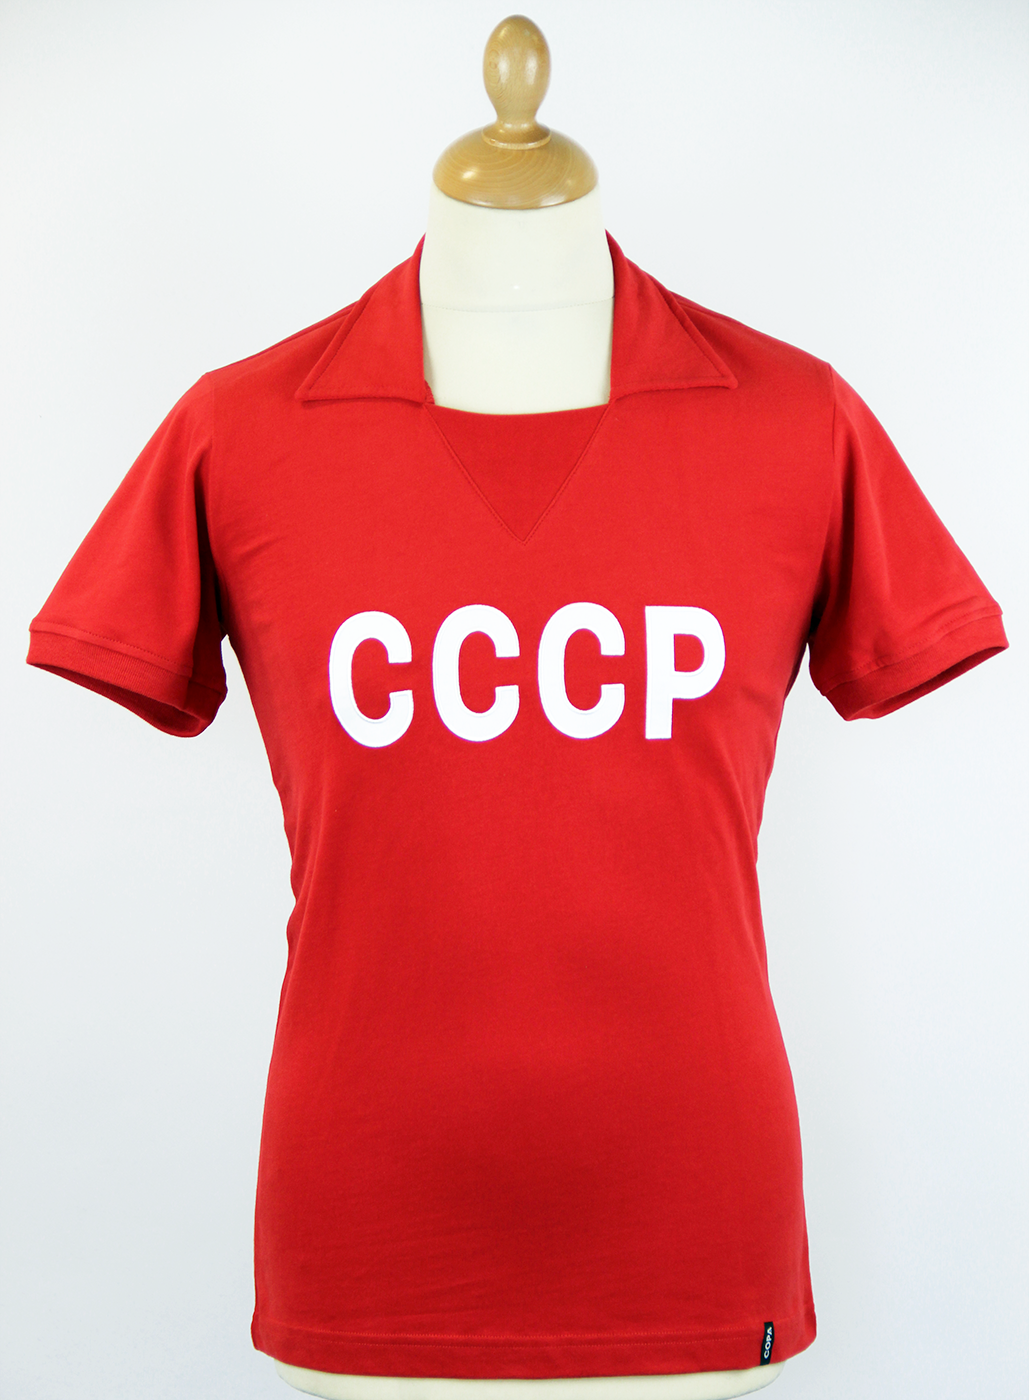 CCCP COPA Retro I960s Vintage USSR Football Top R